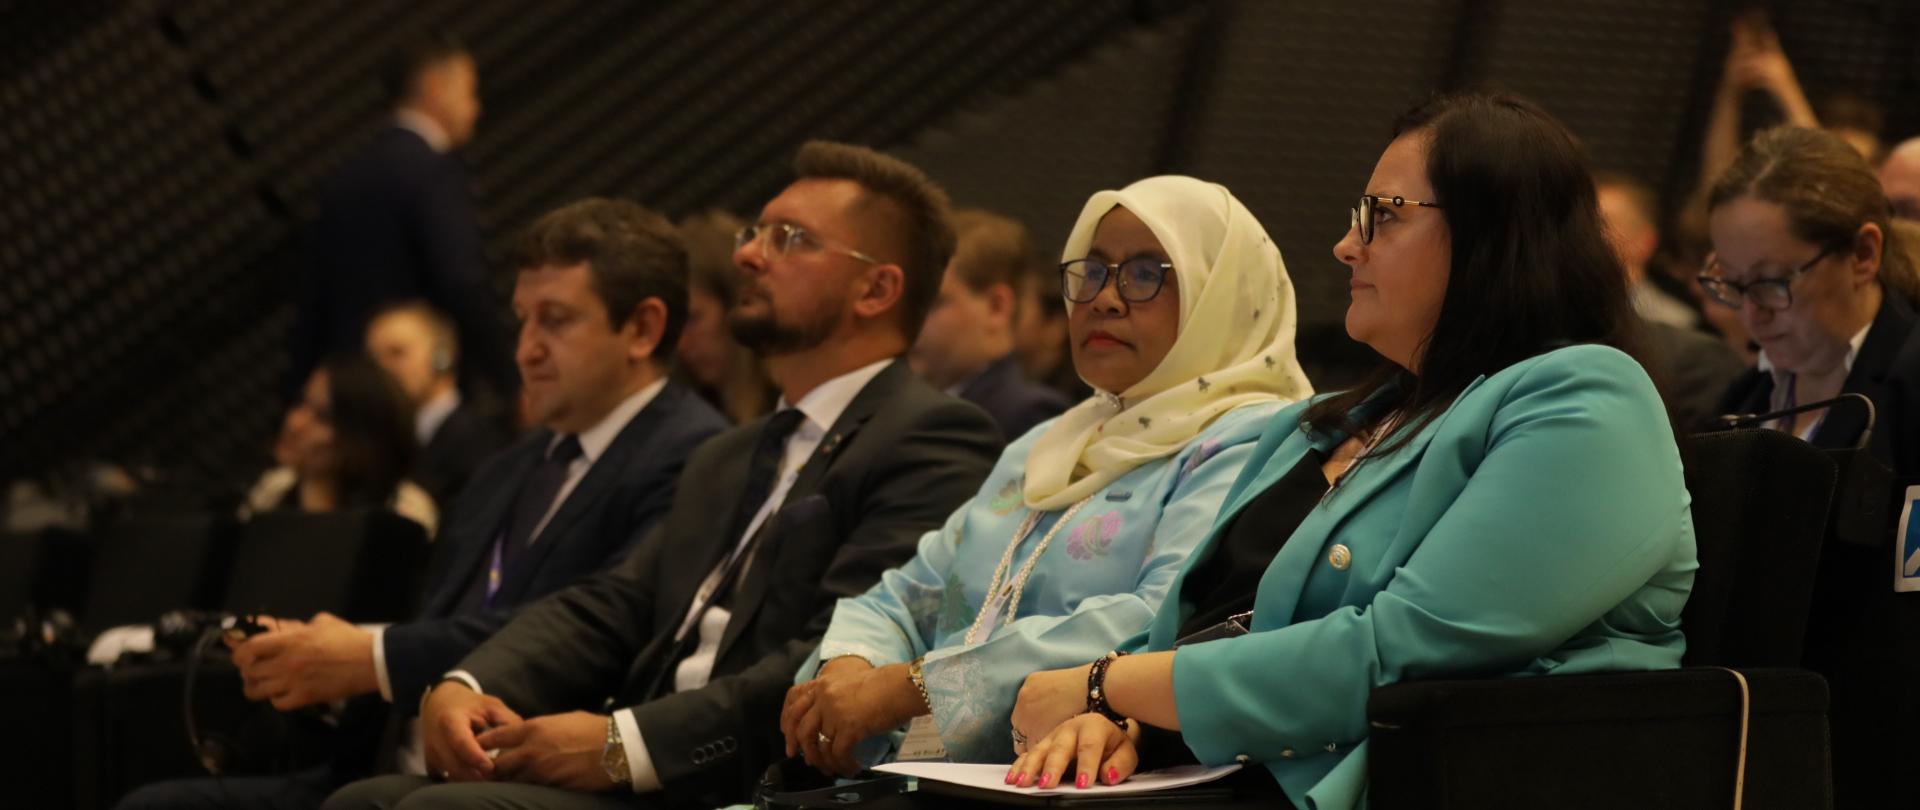 wiceminister Małgorzata Jarosińska-Jedynak, dyrektor Maimunah Mohd Sharif i prezydent Marcin Krupa oraz uczestnicy konferencji